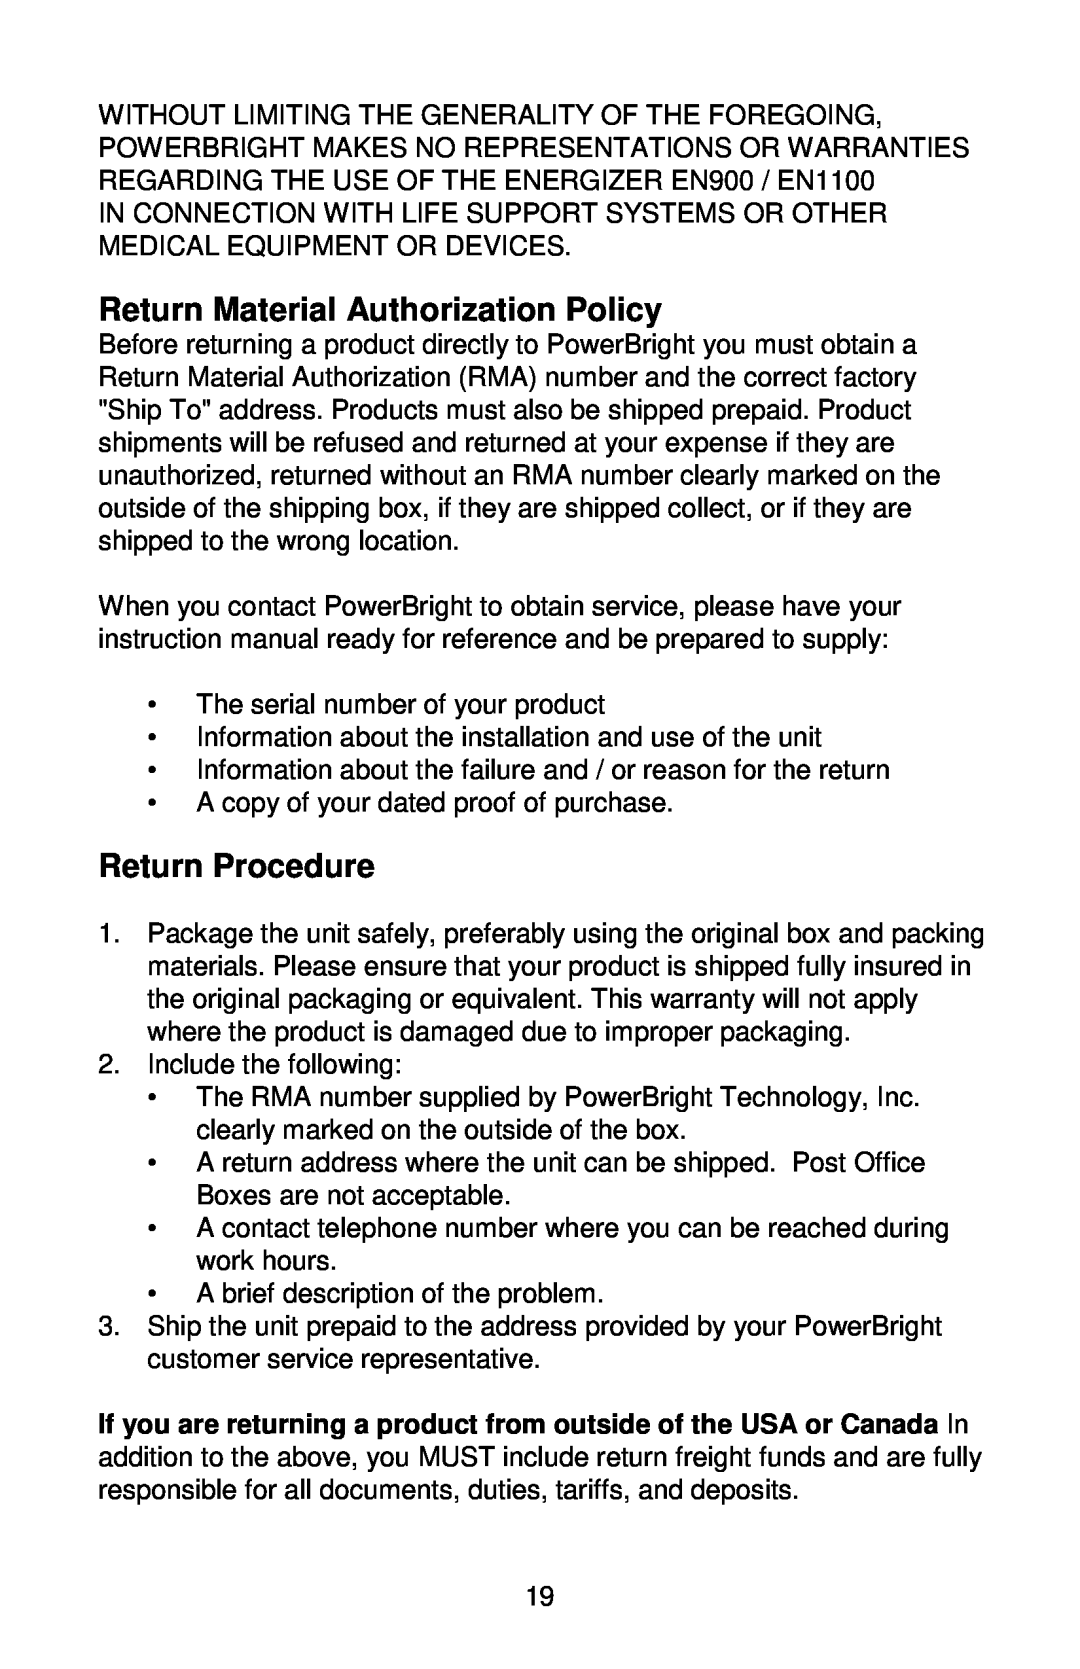 Energizer EN1100 manual Return Material Authorization Policy, Return Procedure 